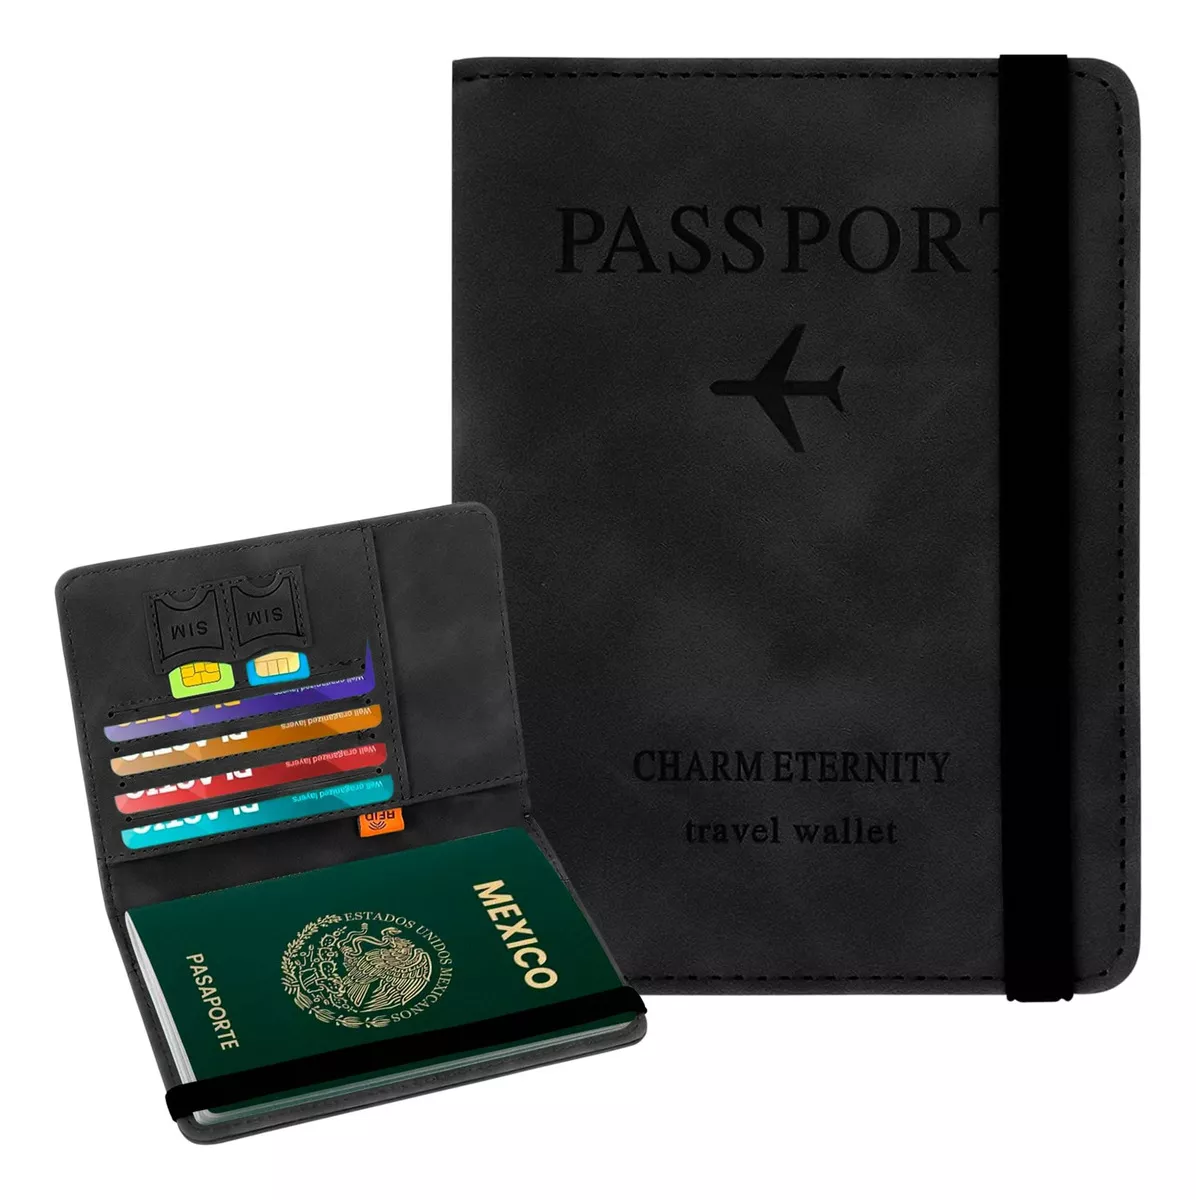 Tercera imagen para búsqueda de pasaporte funda